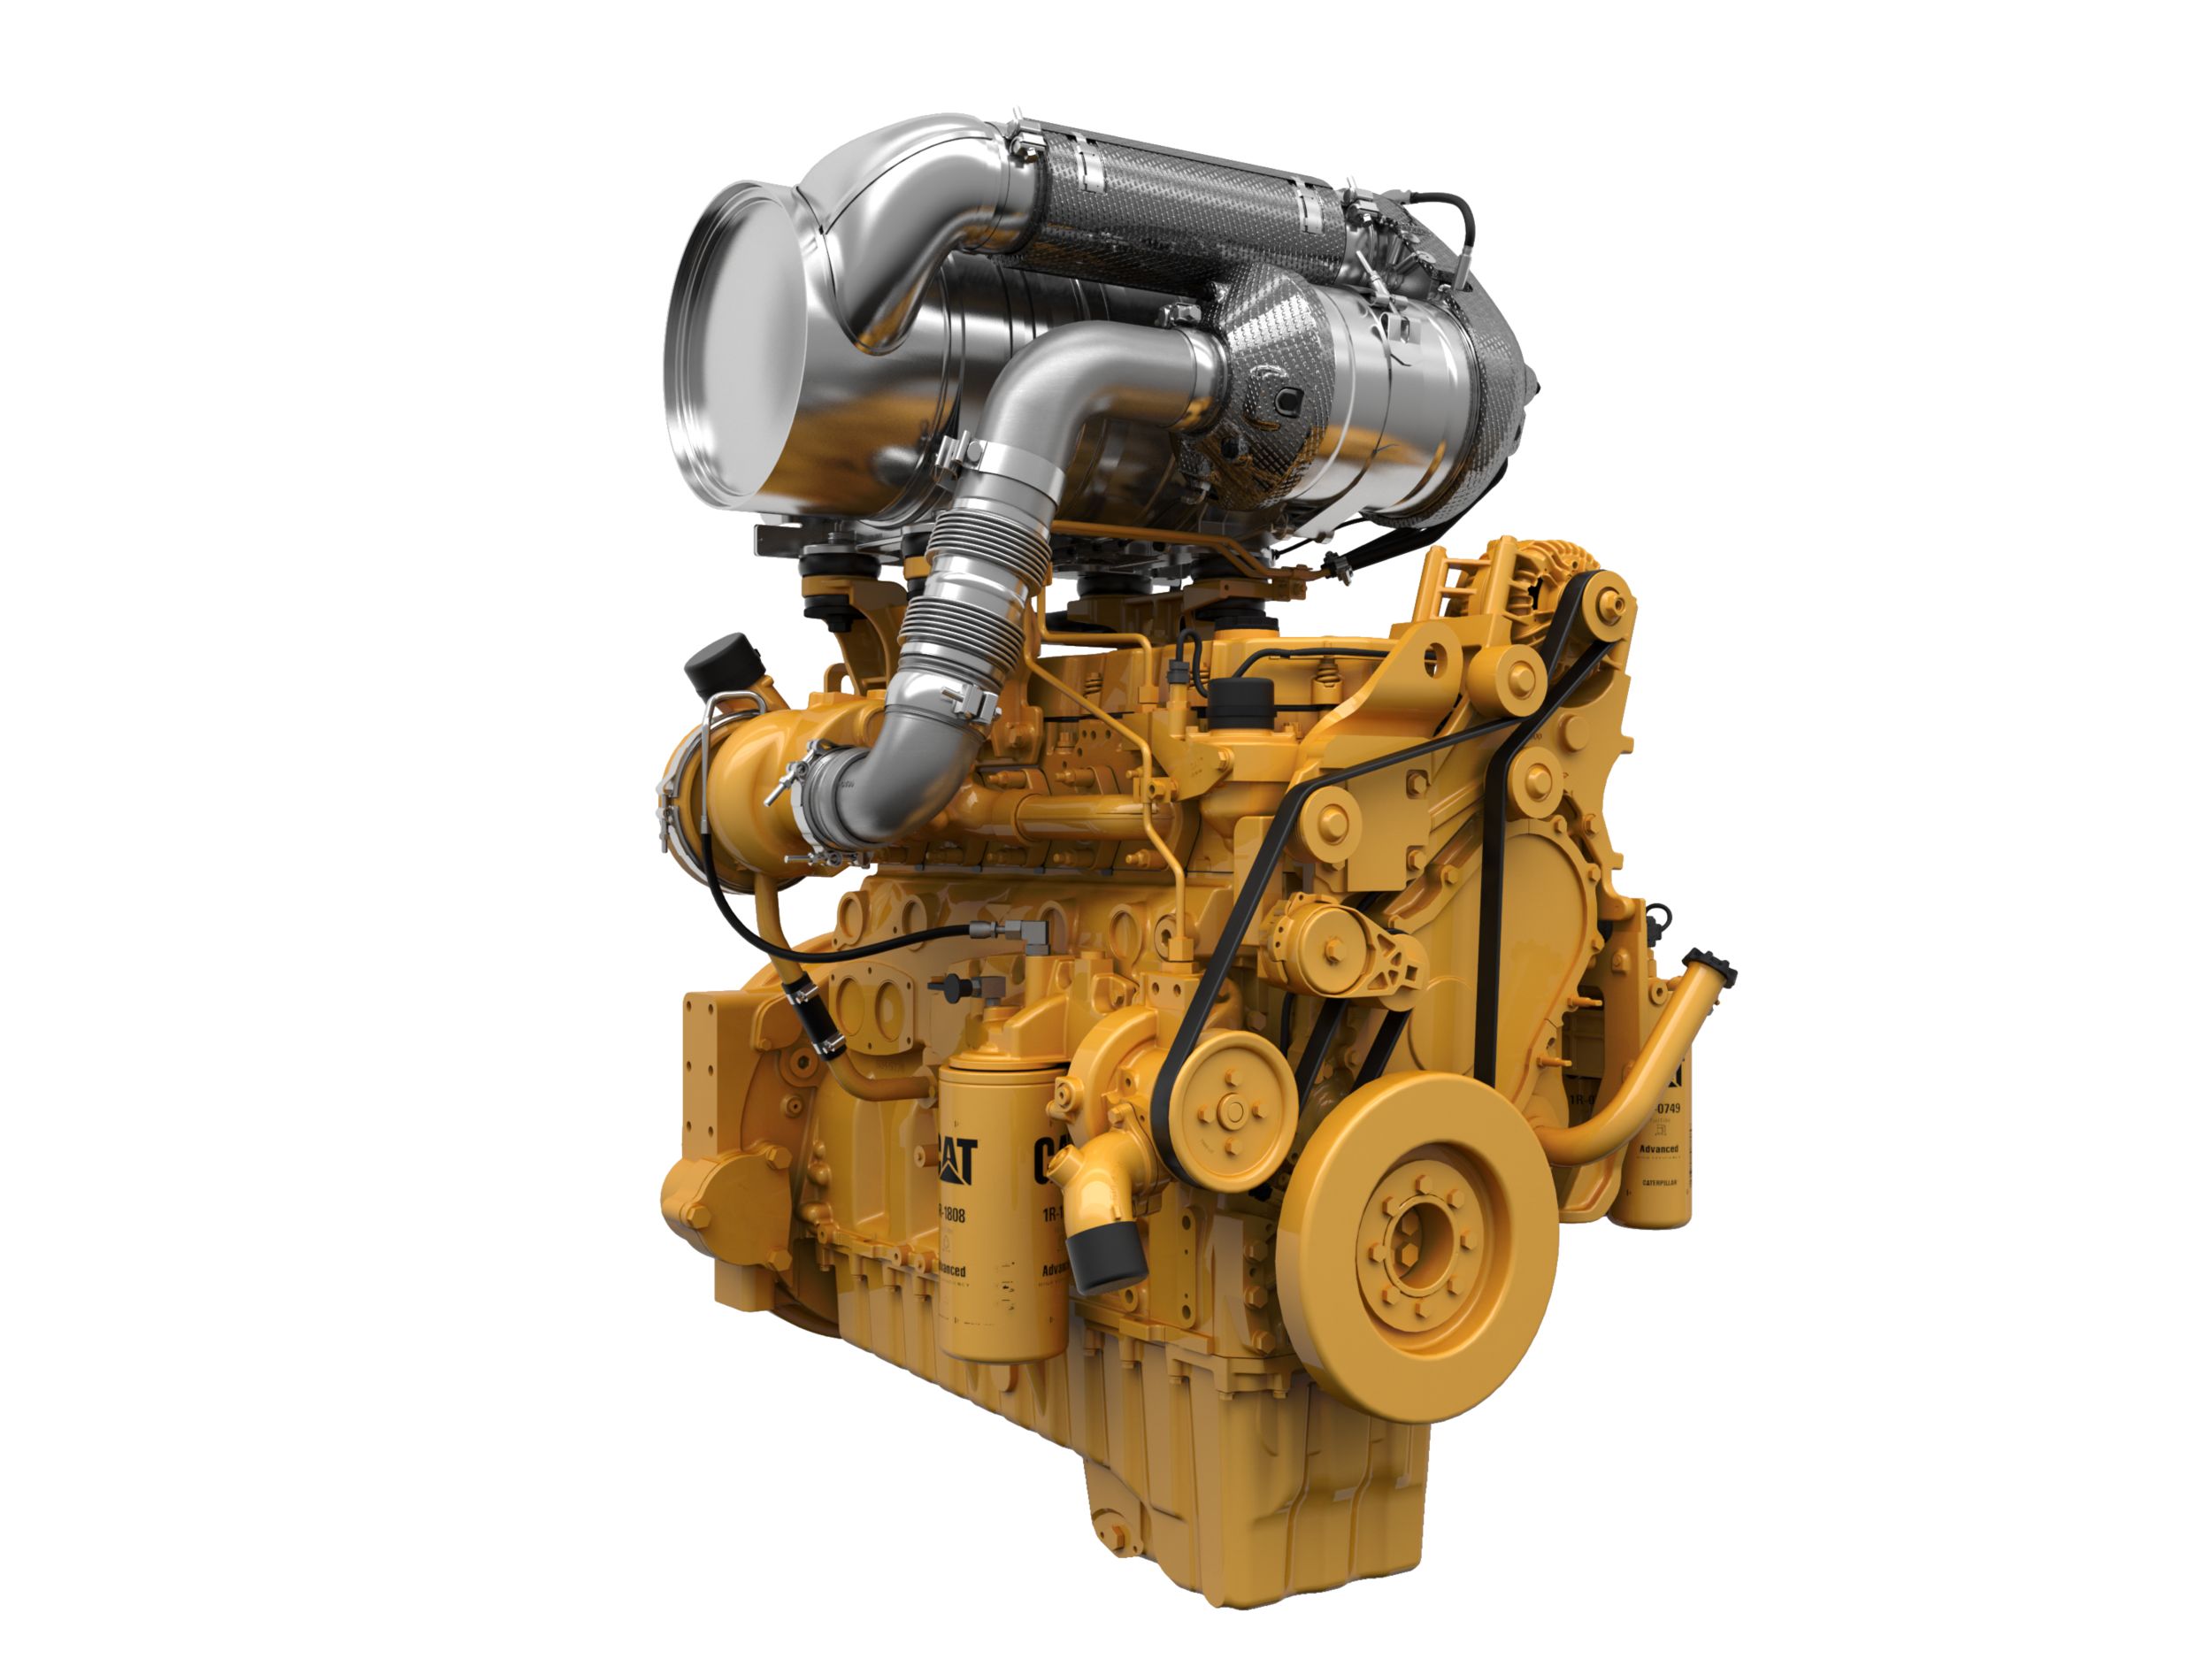 C9.3B Tier 4 Diesel Engines - Highly Regulated